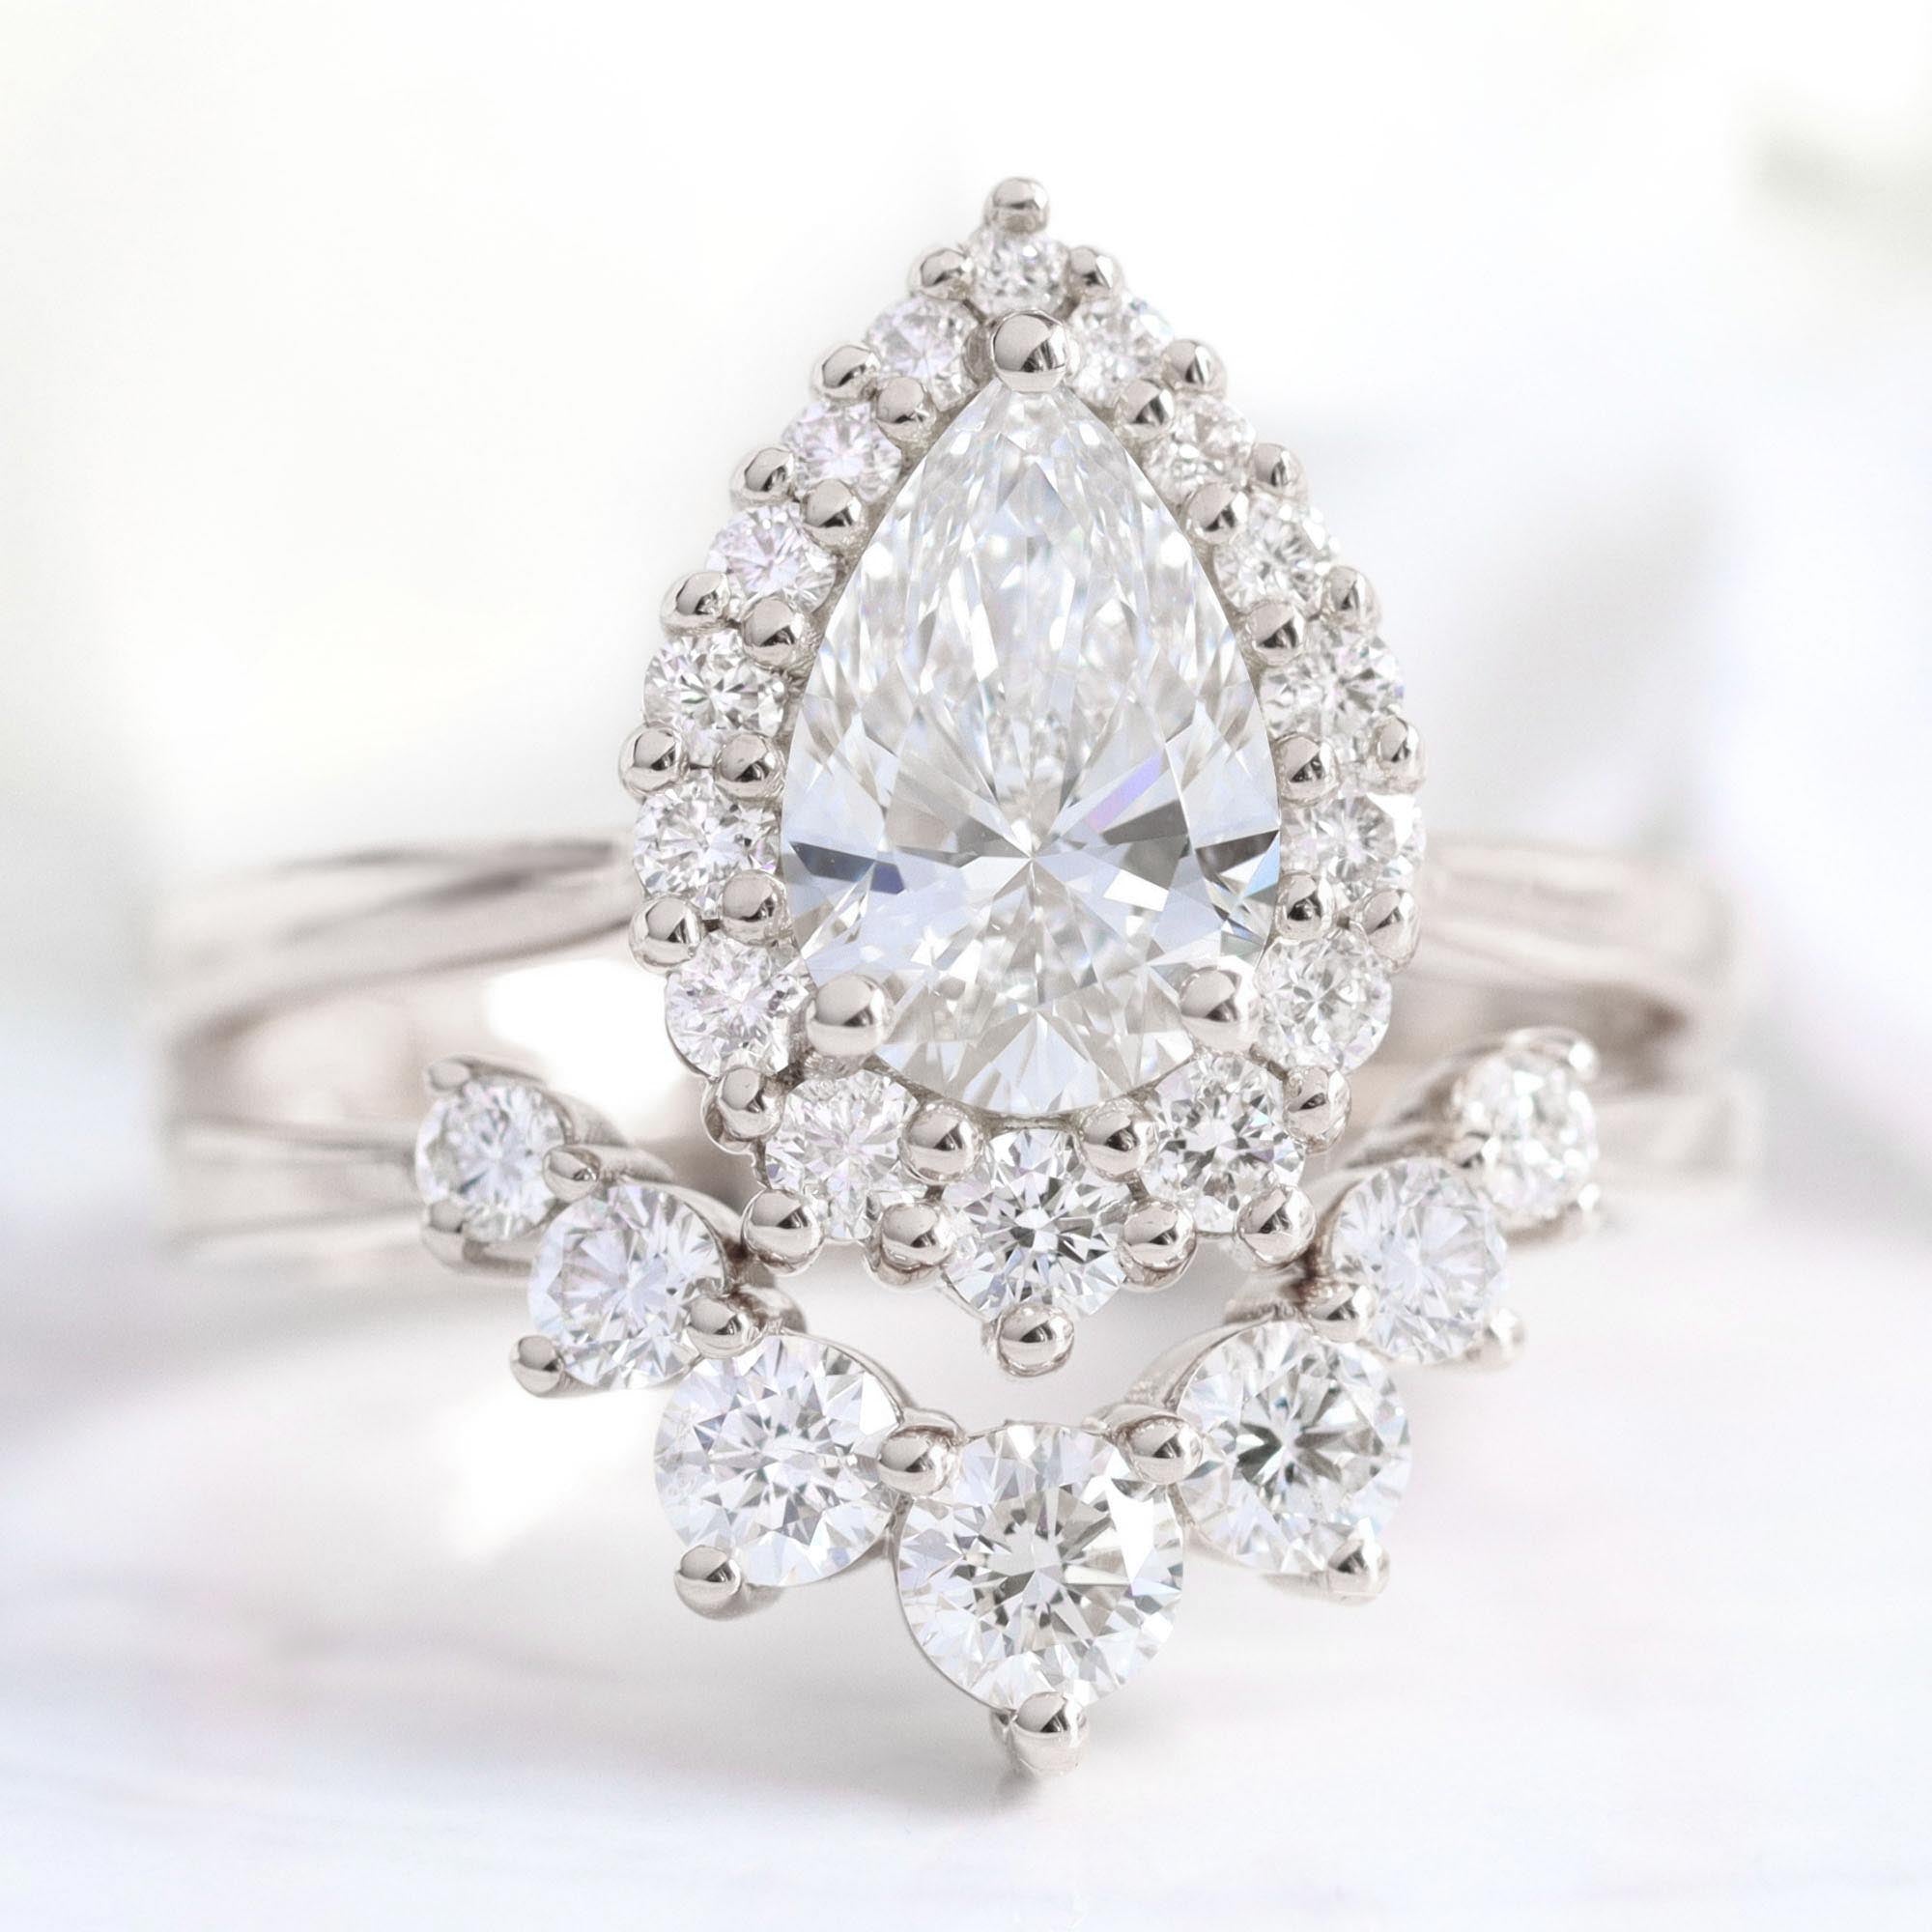 lab diamond ring stack white gold pear diamond halo engagement ring set La More Design Jewelry